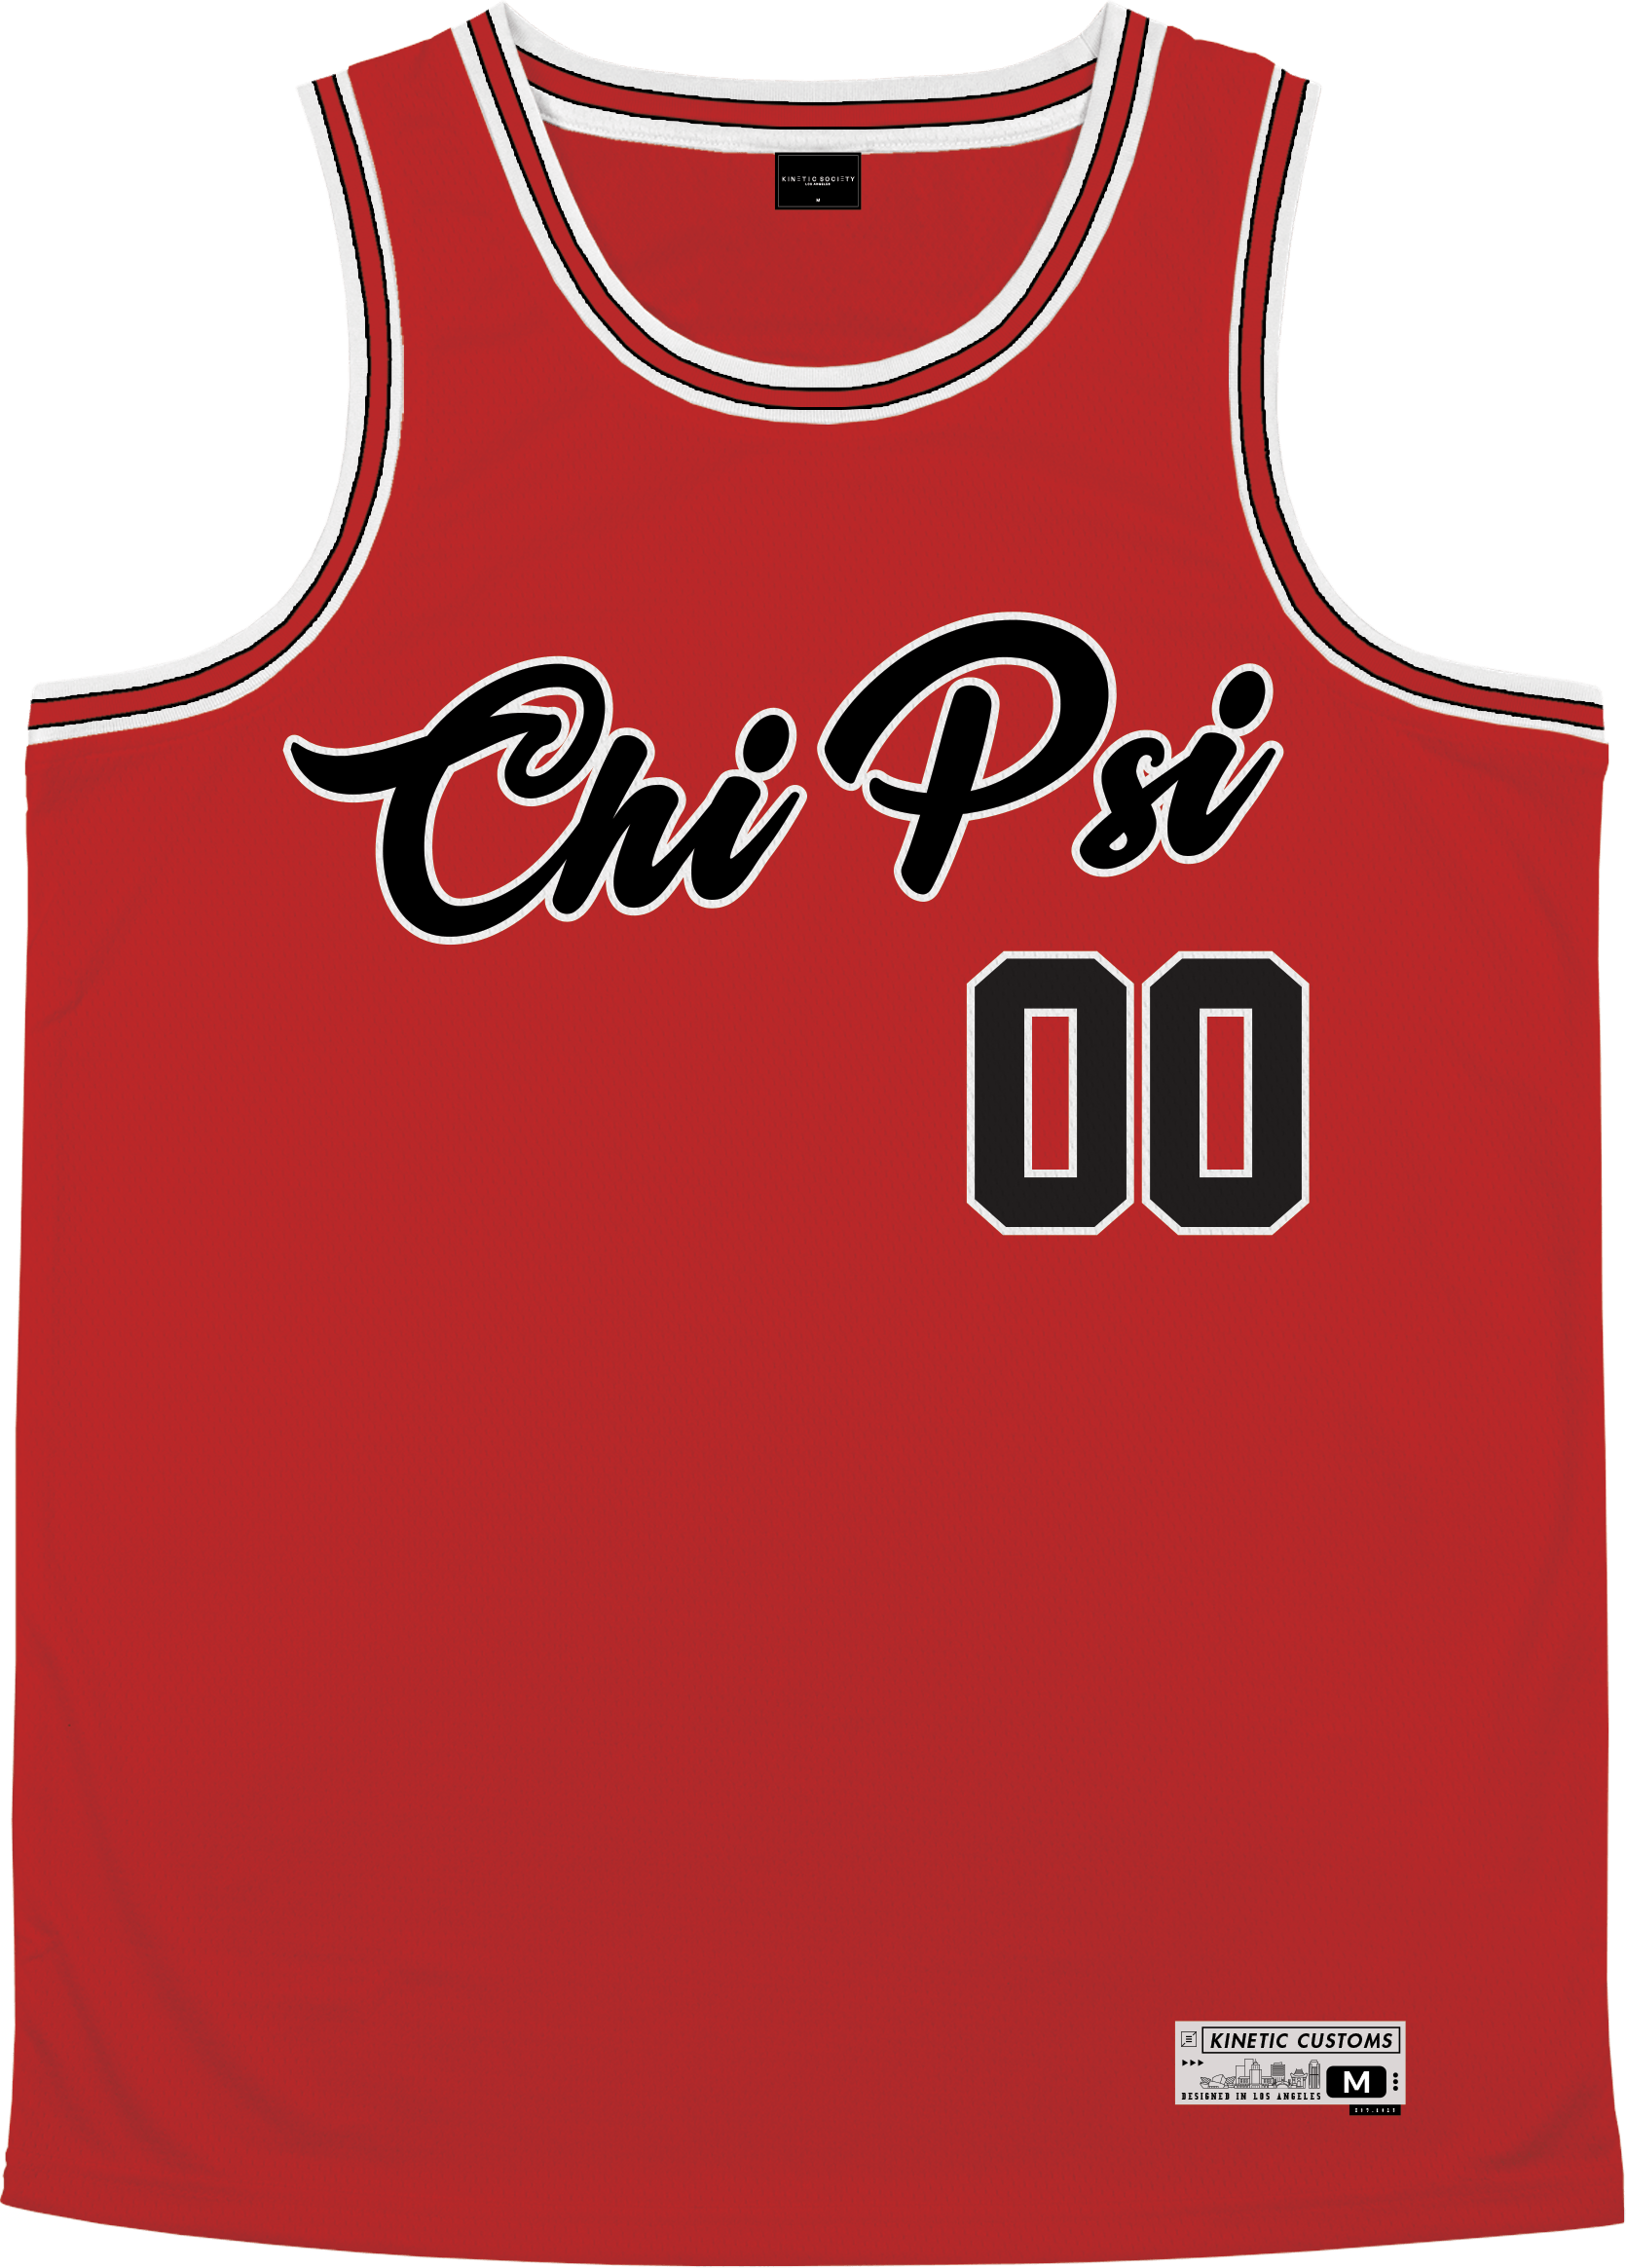 Chi Psi - Big Red Basketball Jersey - Kinetic Society